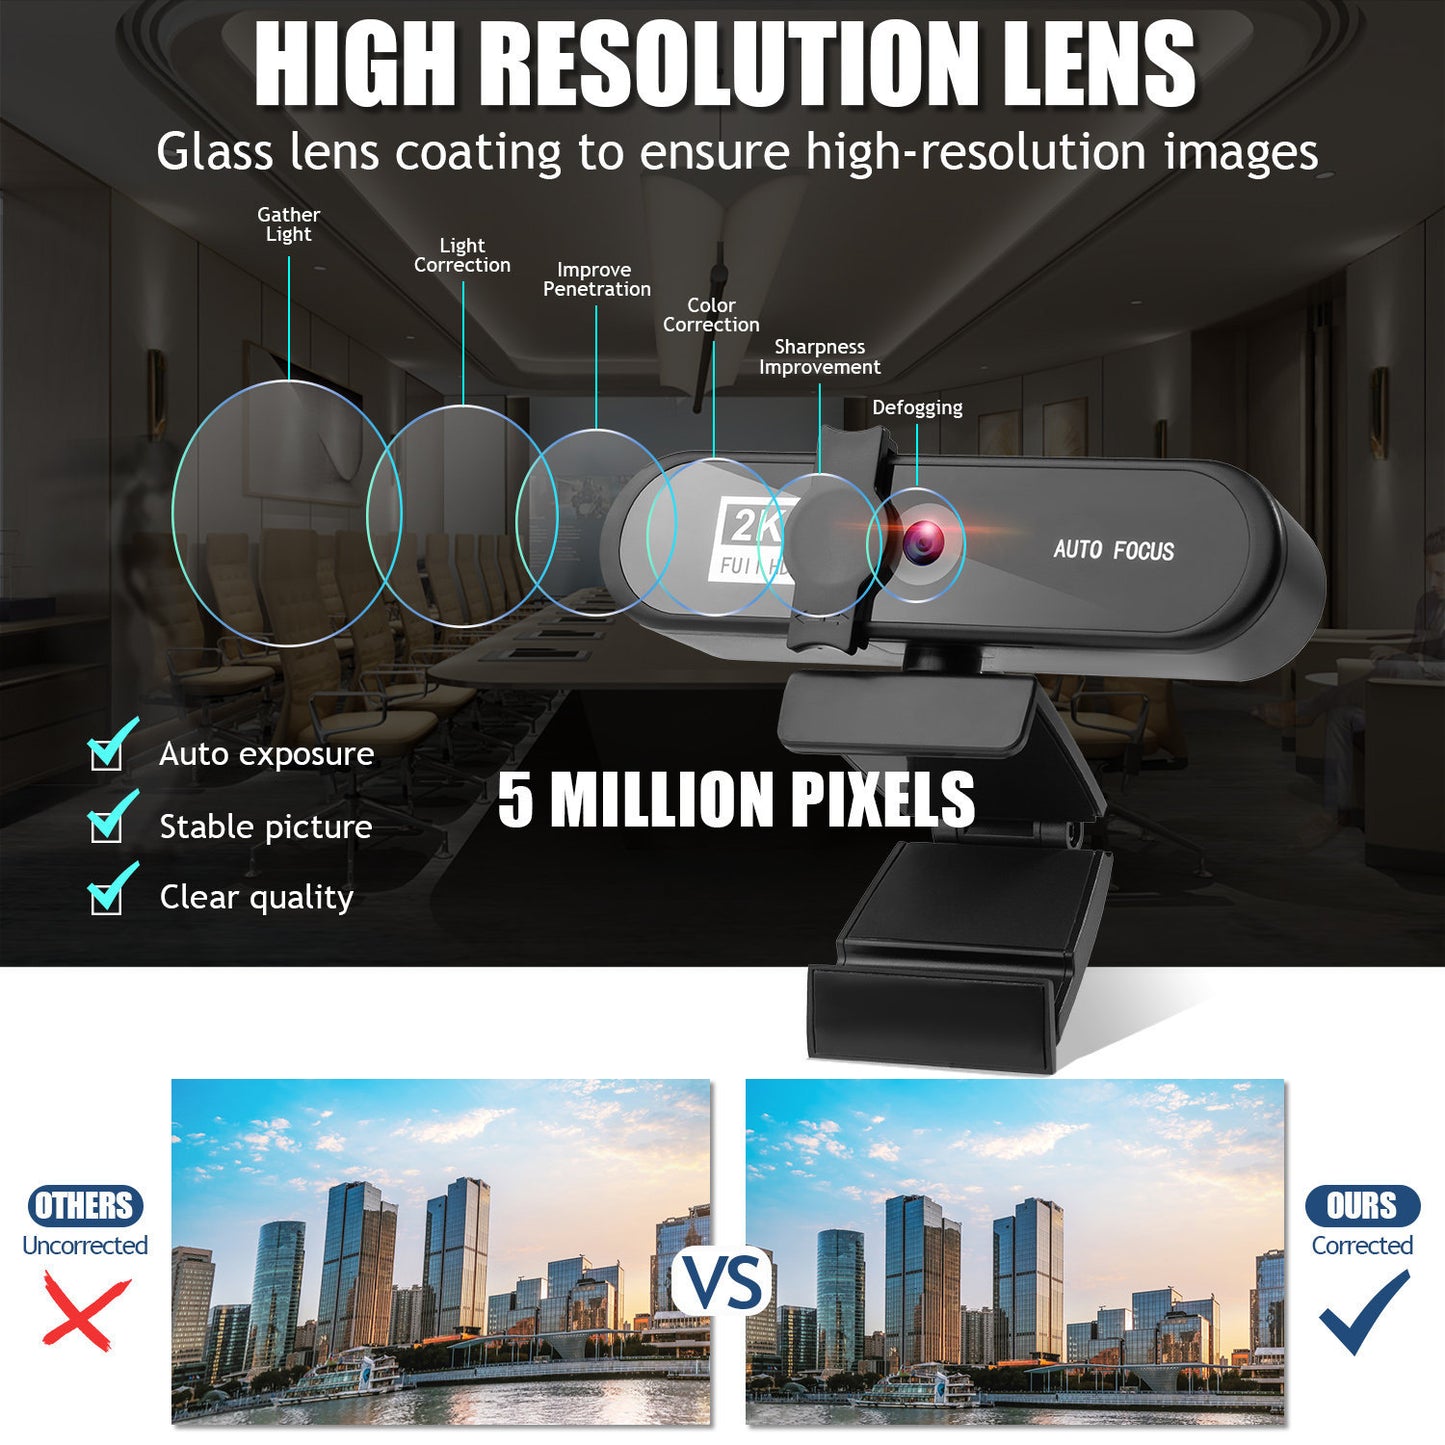 4K / 2K / 1080p Full HD Auto-Focus Webcam - Built-in Microphone + Tripod